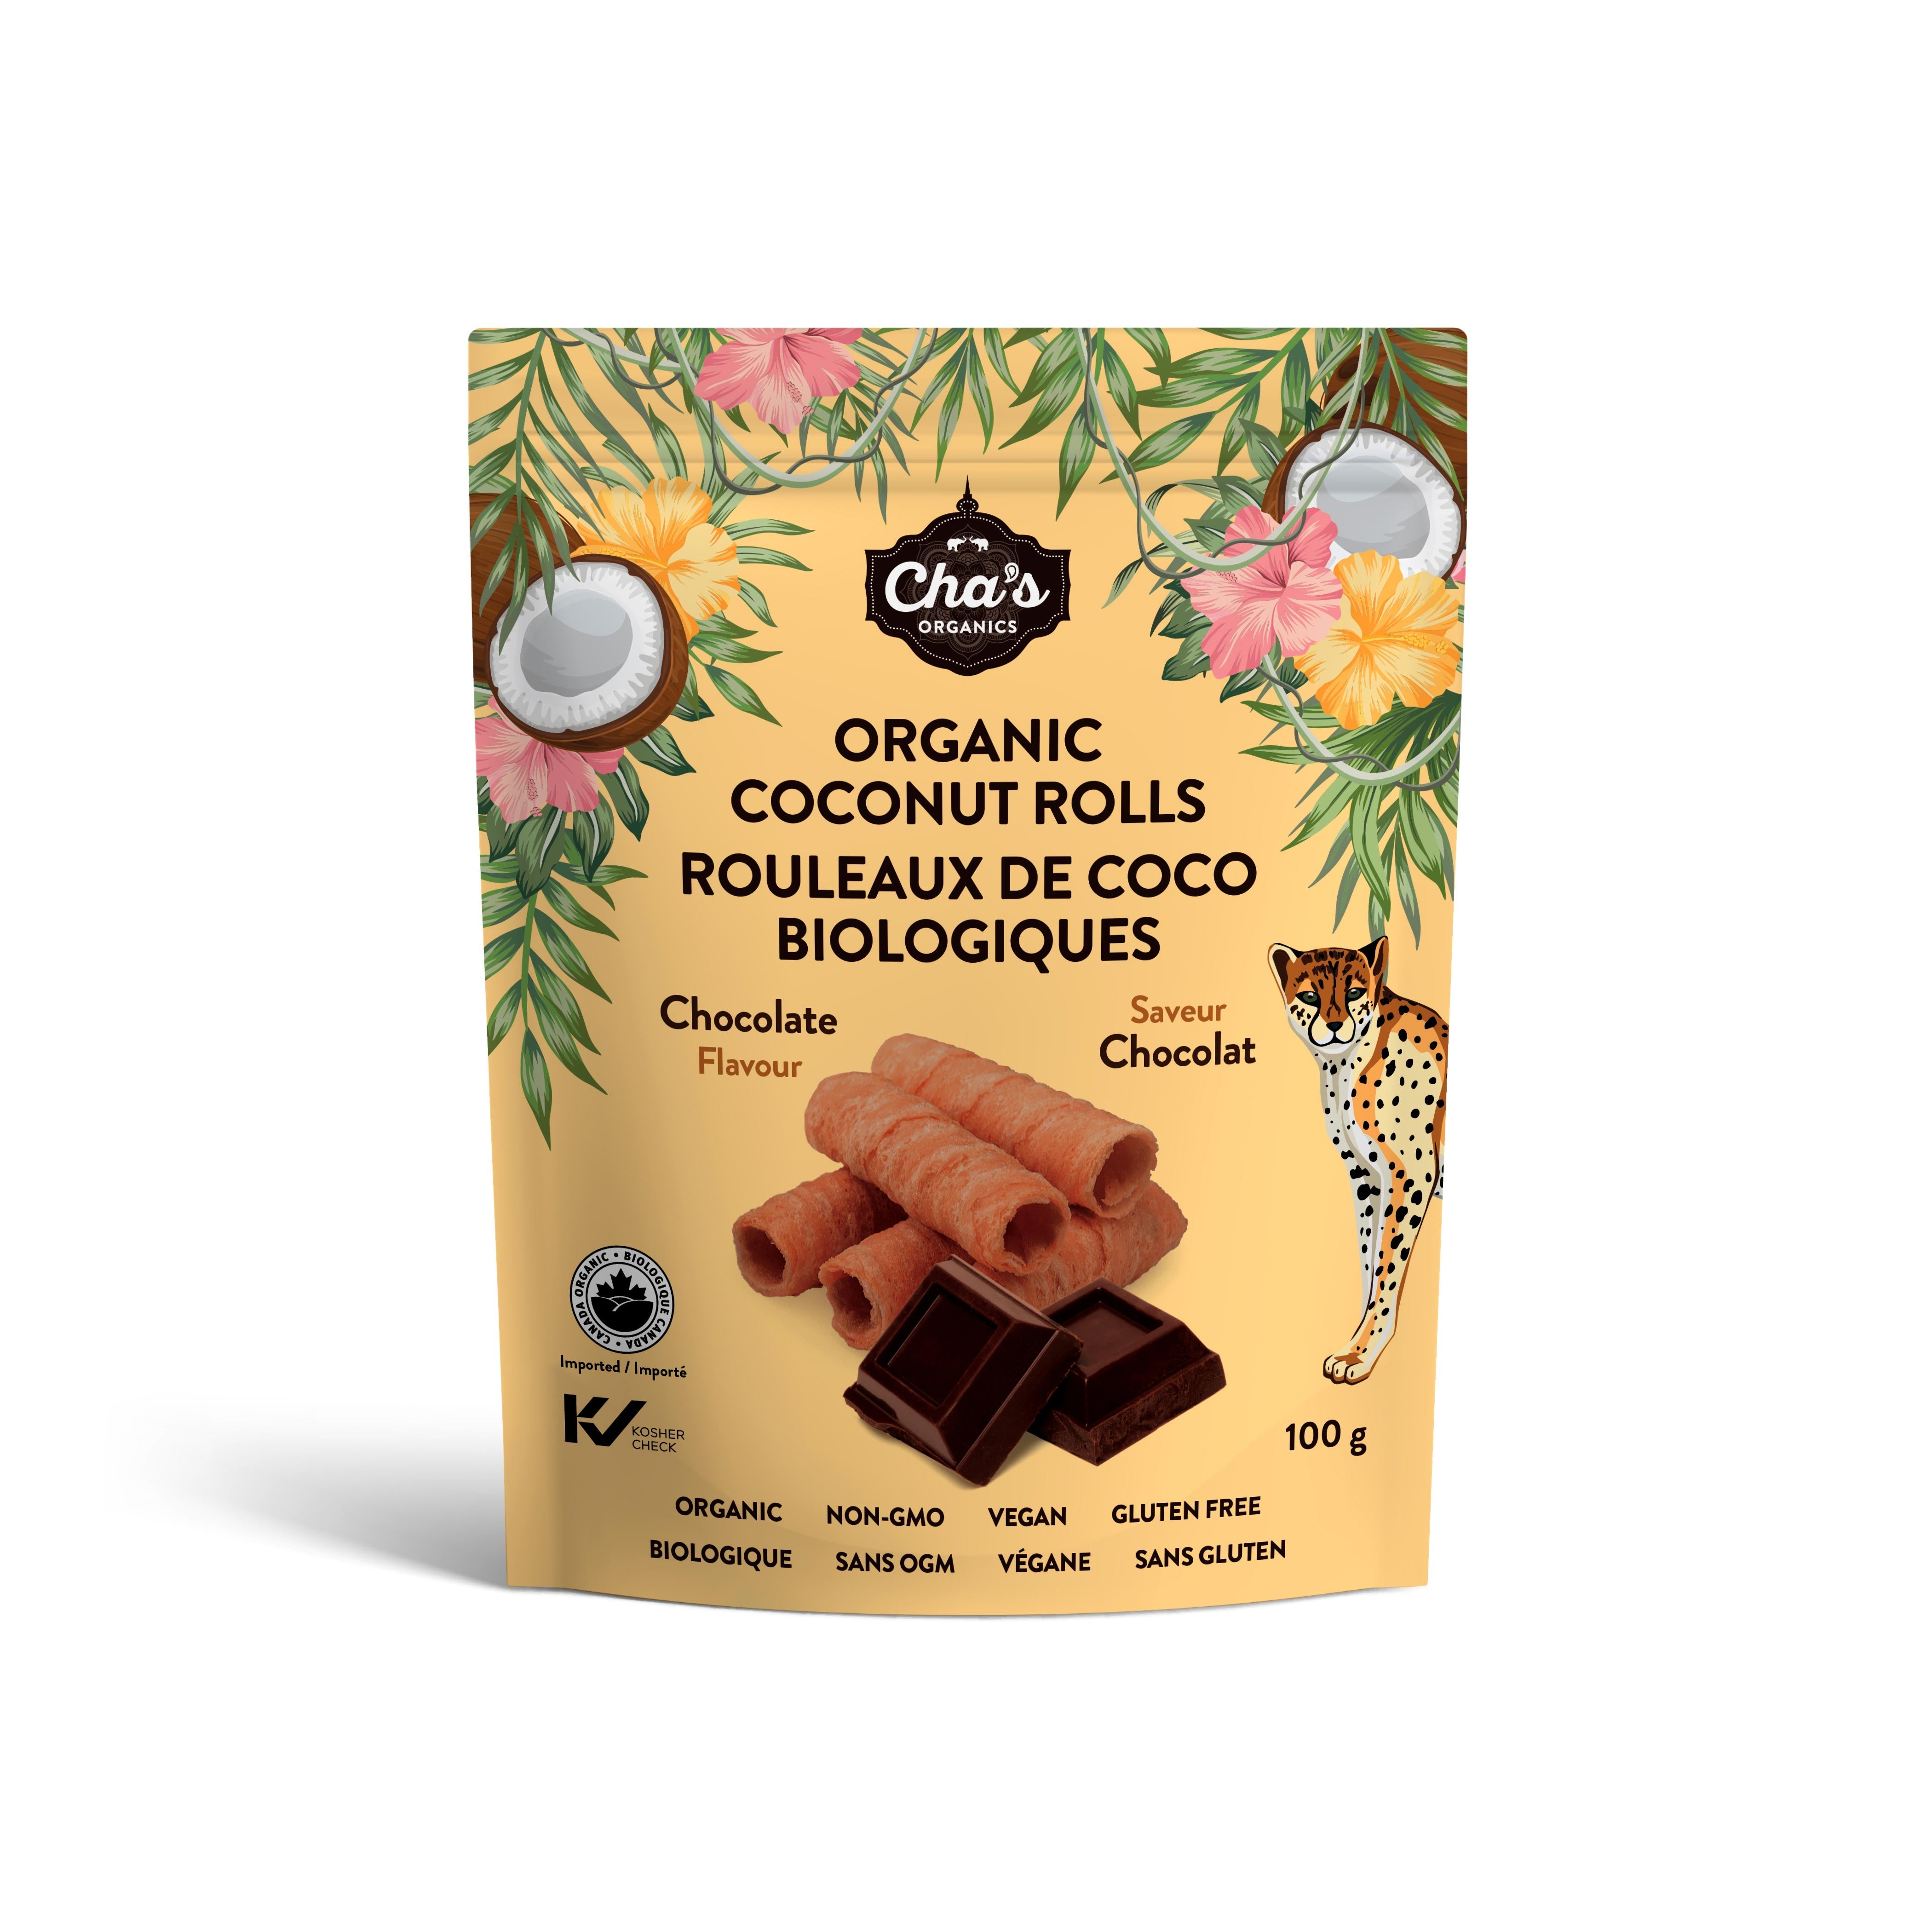 Cha's Organic Coconut Rolls Chocolate 100g